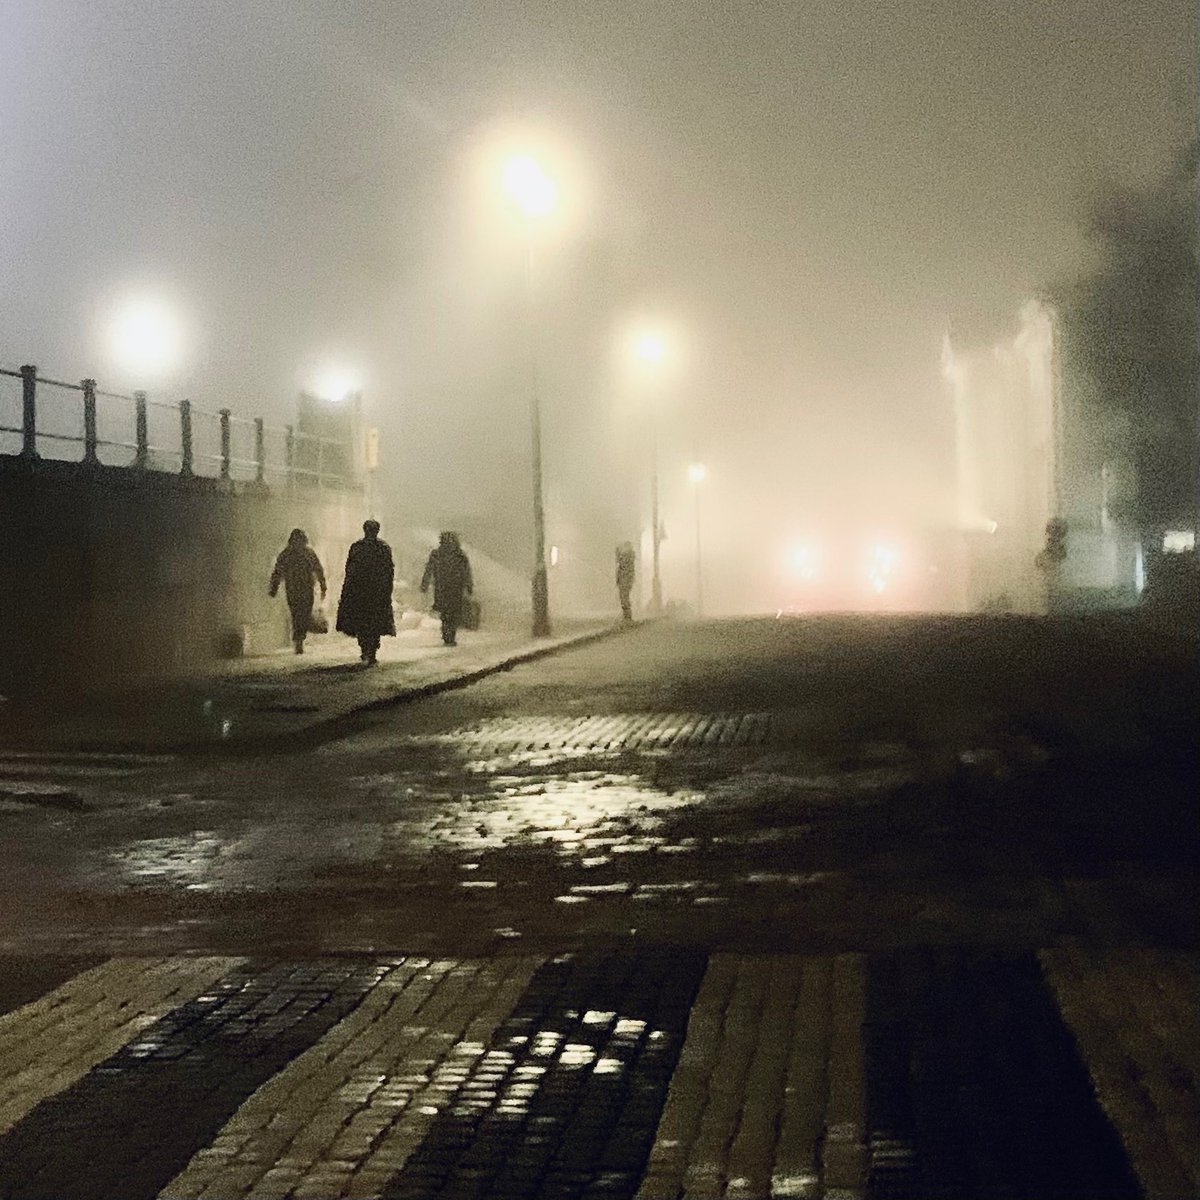 RT @EmiliaKilpua: Helsinki embraced by the fog https://t.co/CgQKHLdOwA